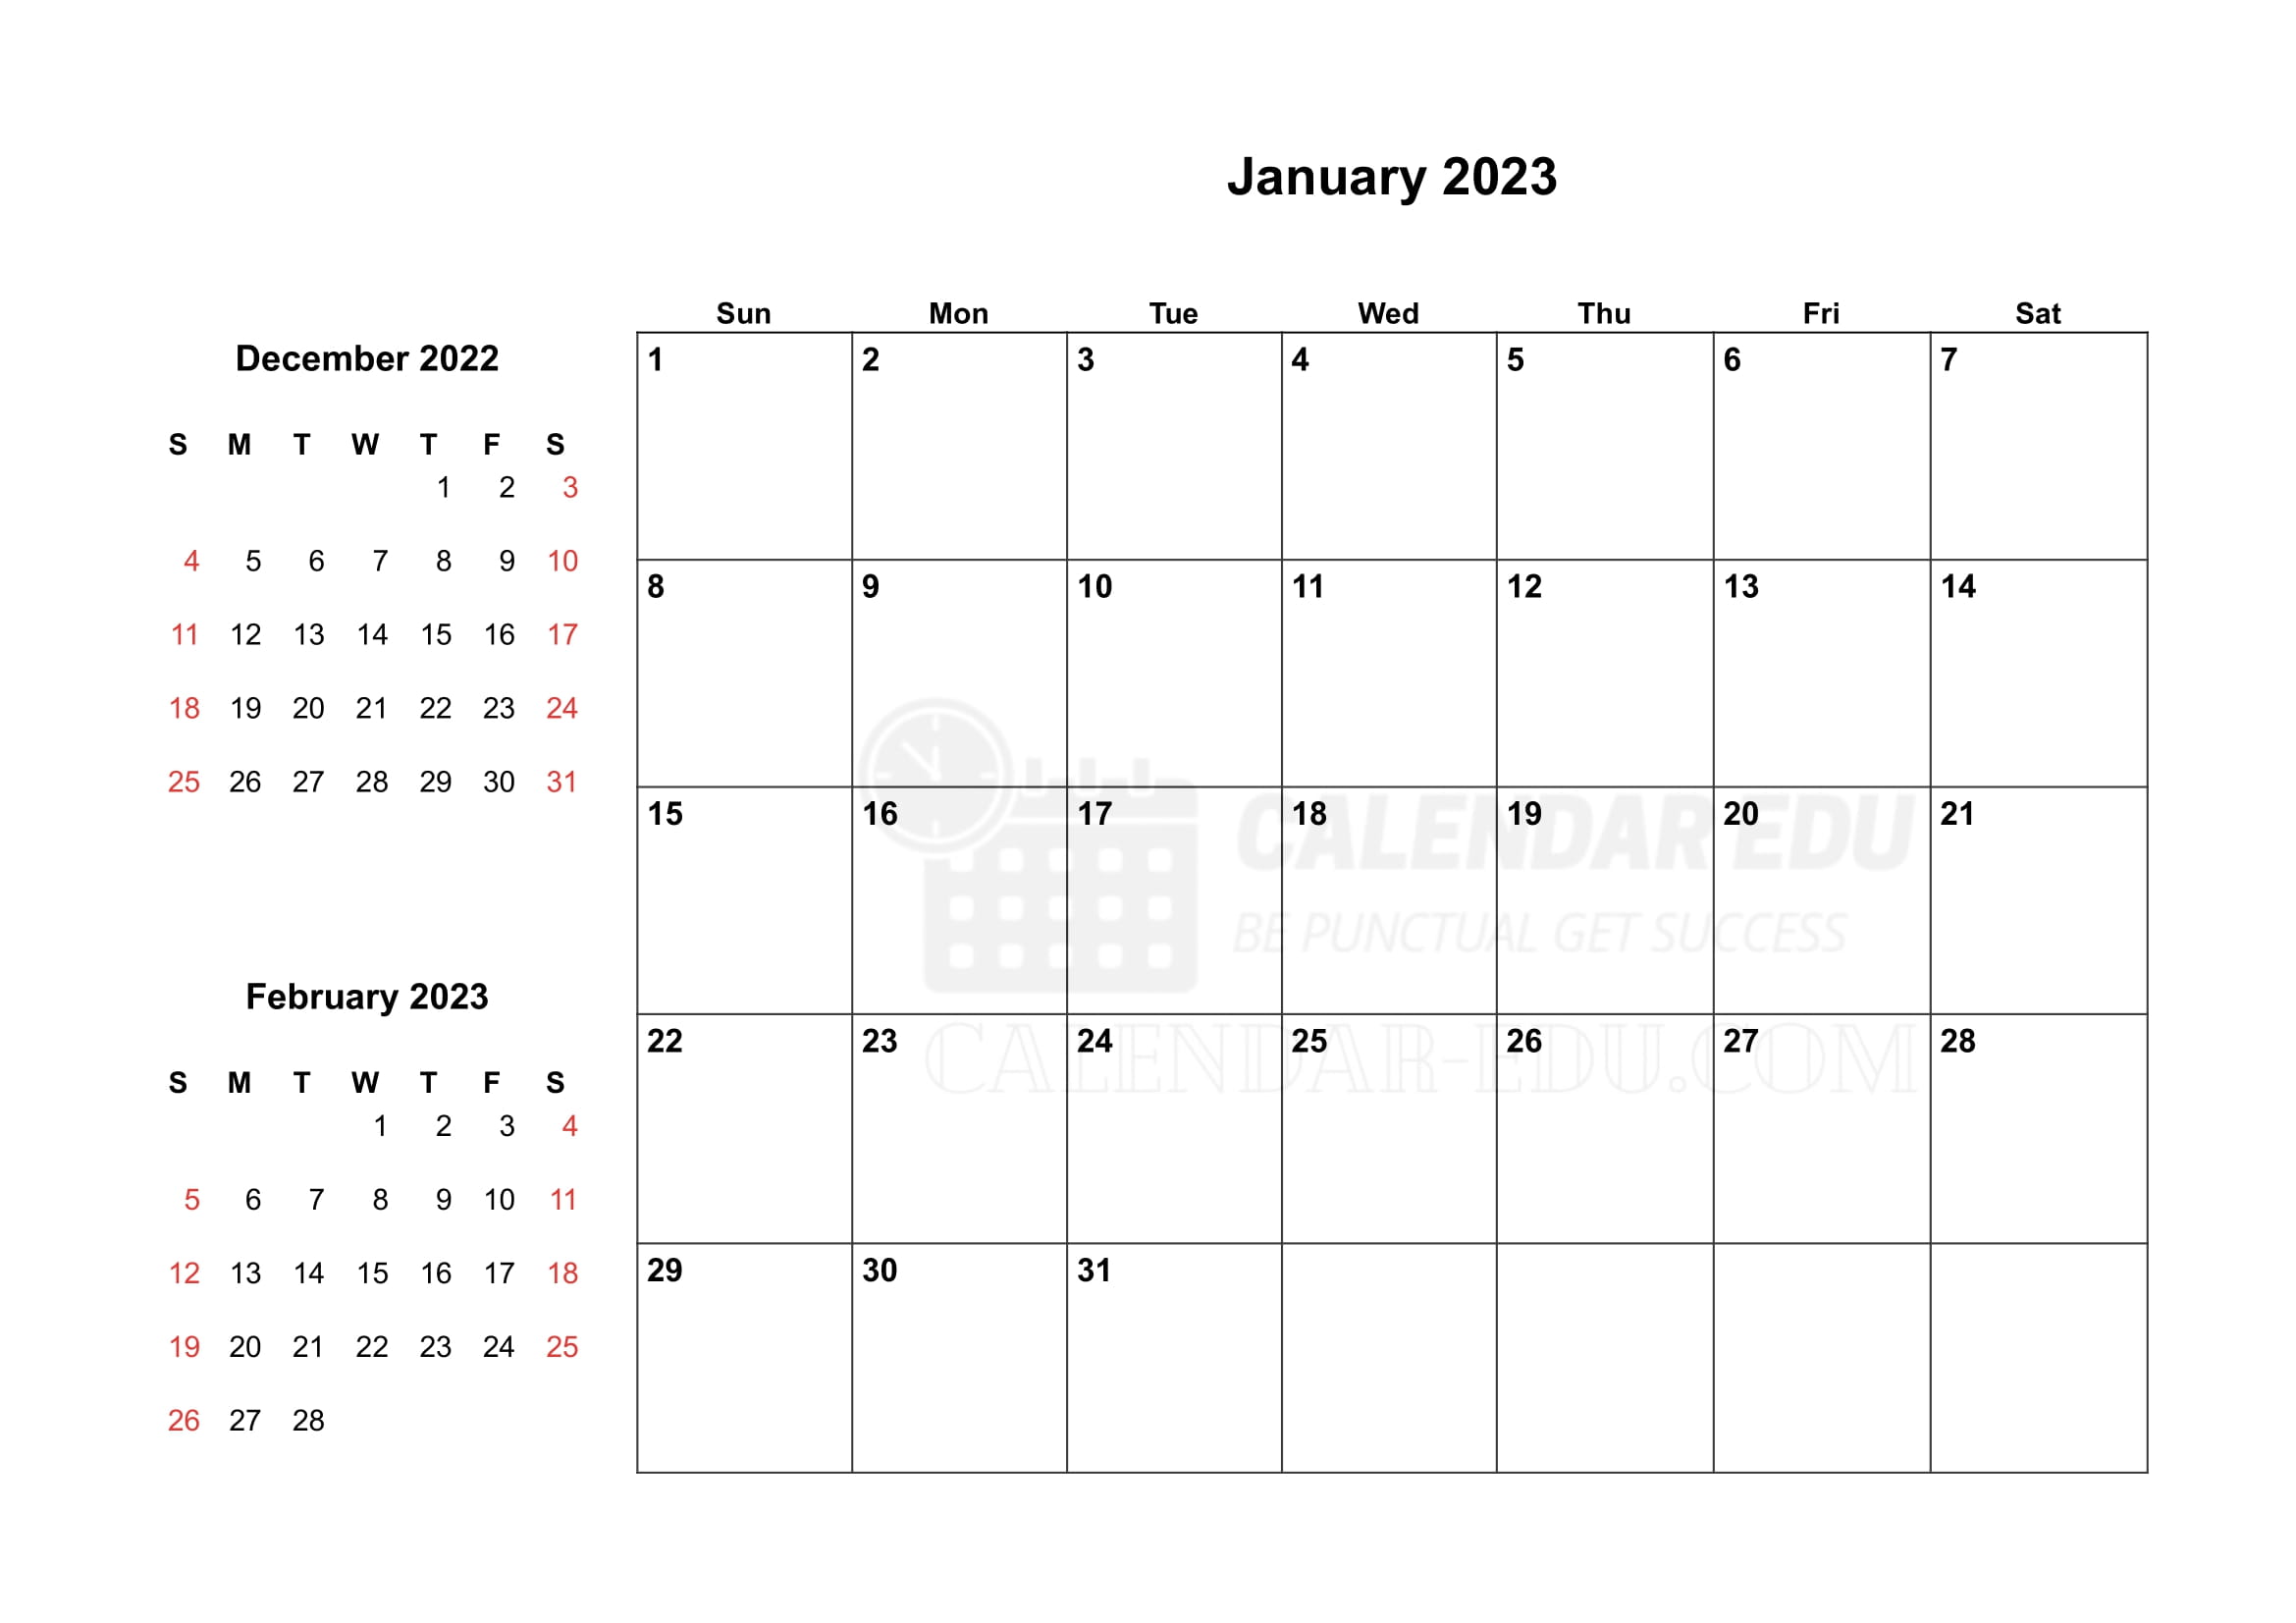 January 2023 Calendar Printable | Free 2023 Blank Templates